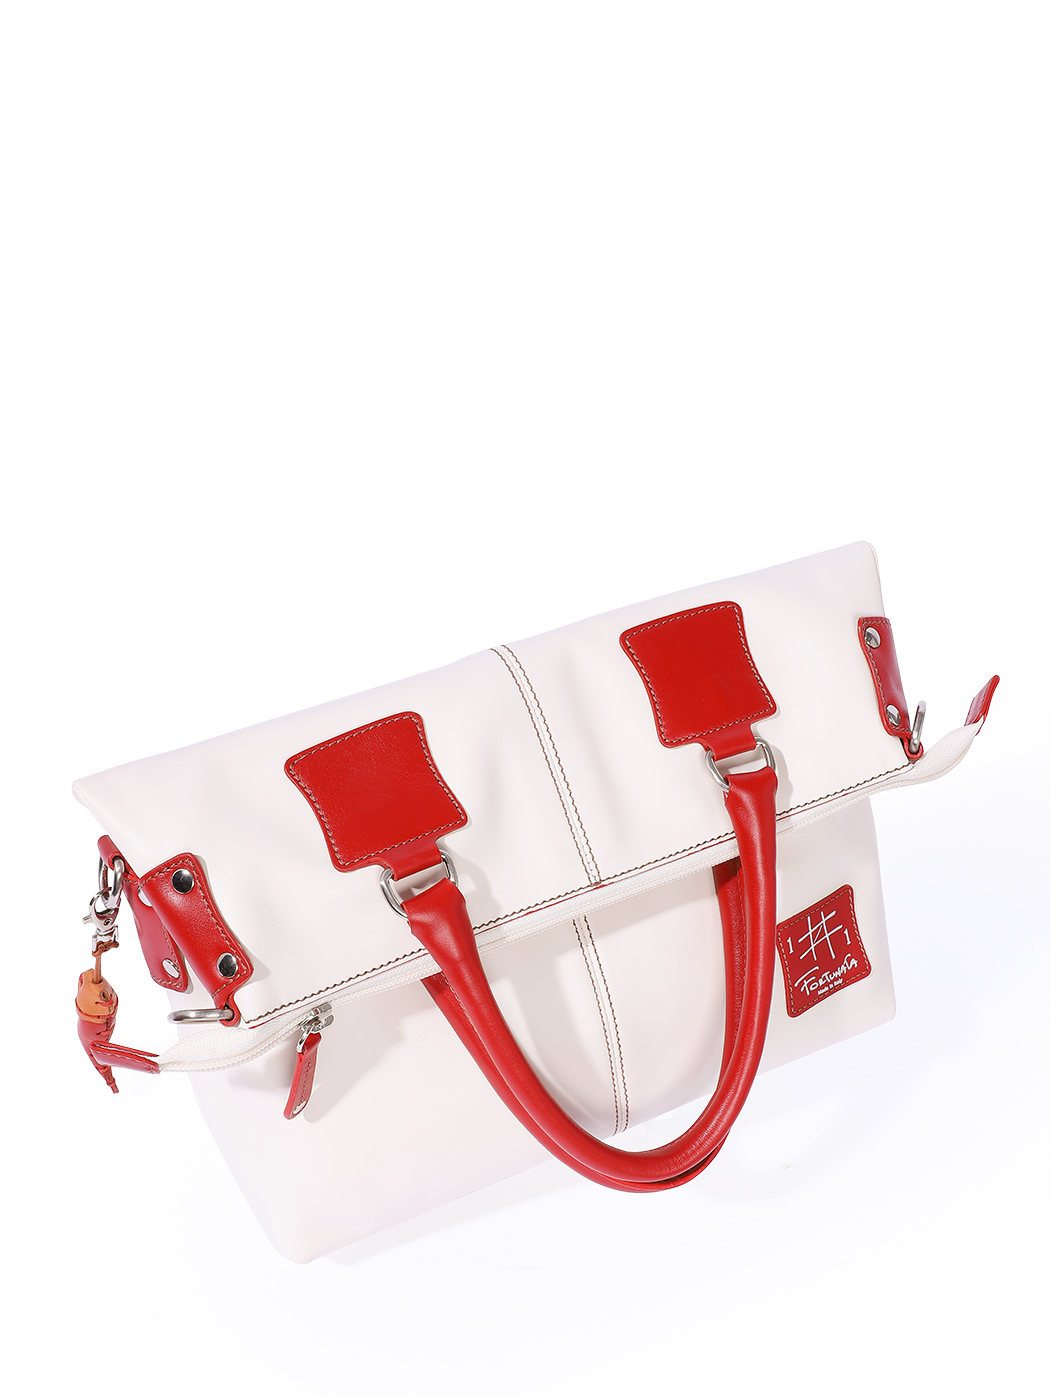 $695 tag ANNE KLEIN orange ostrich leather handbag made in ITALY Brand NEW